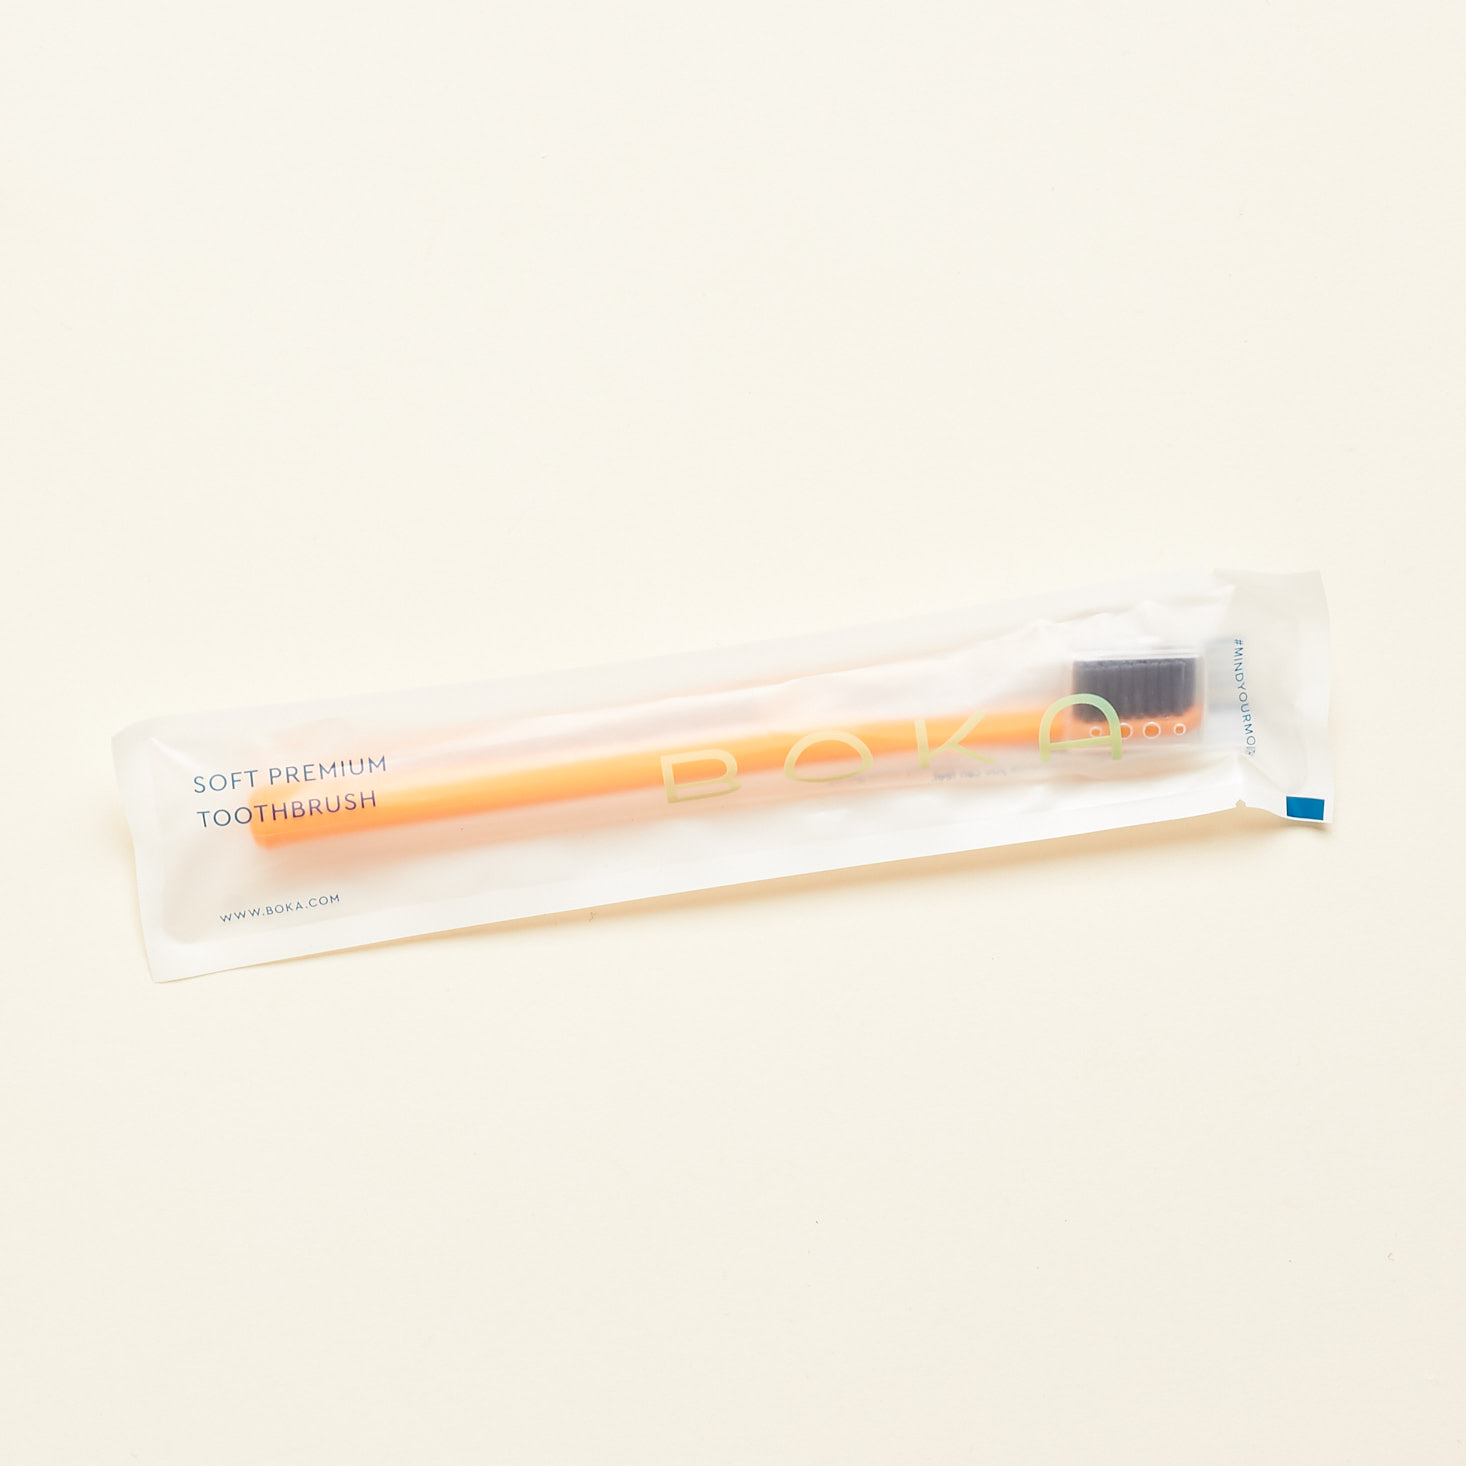 orange boka toothbrush in packaging